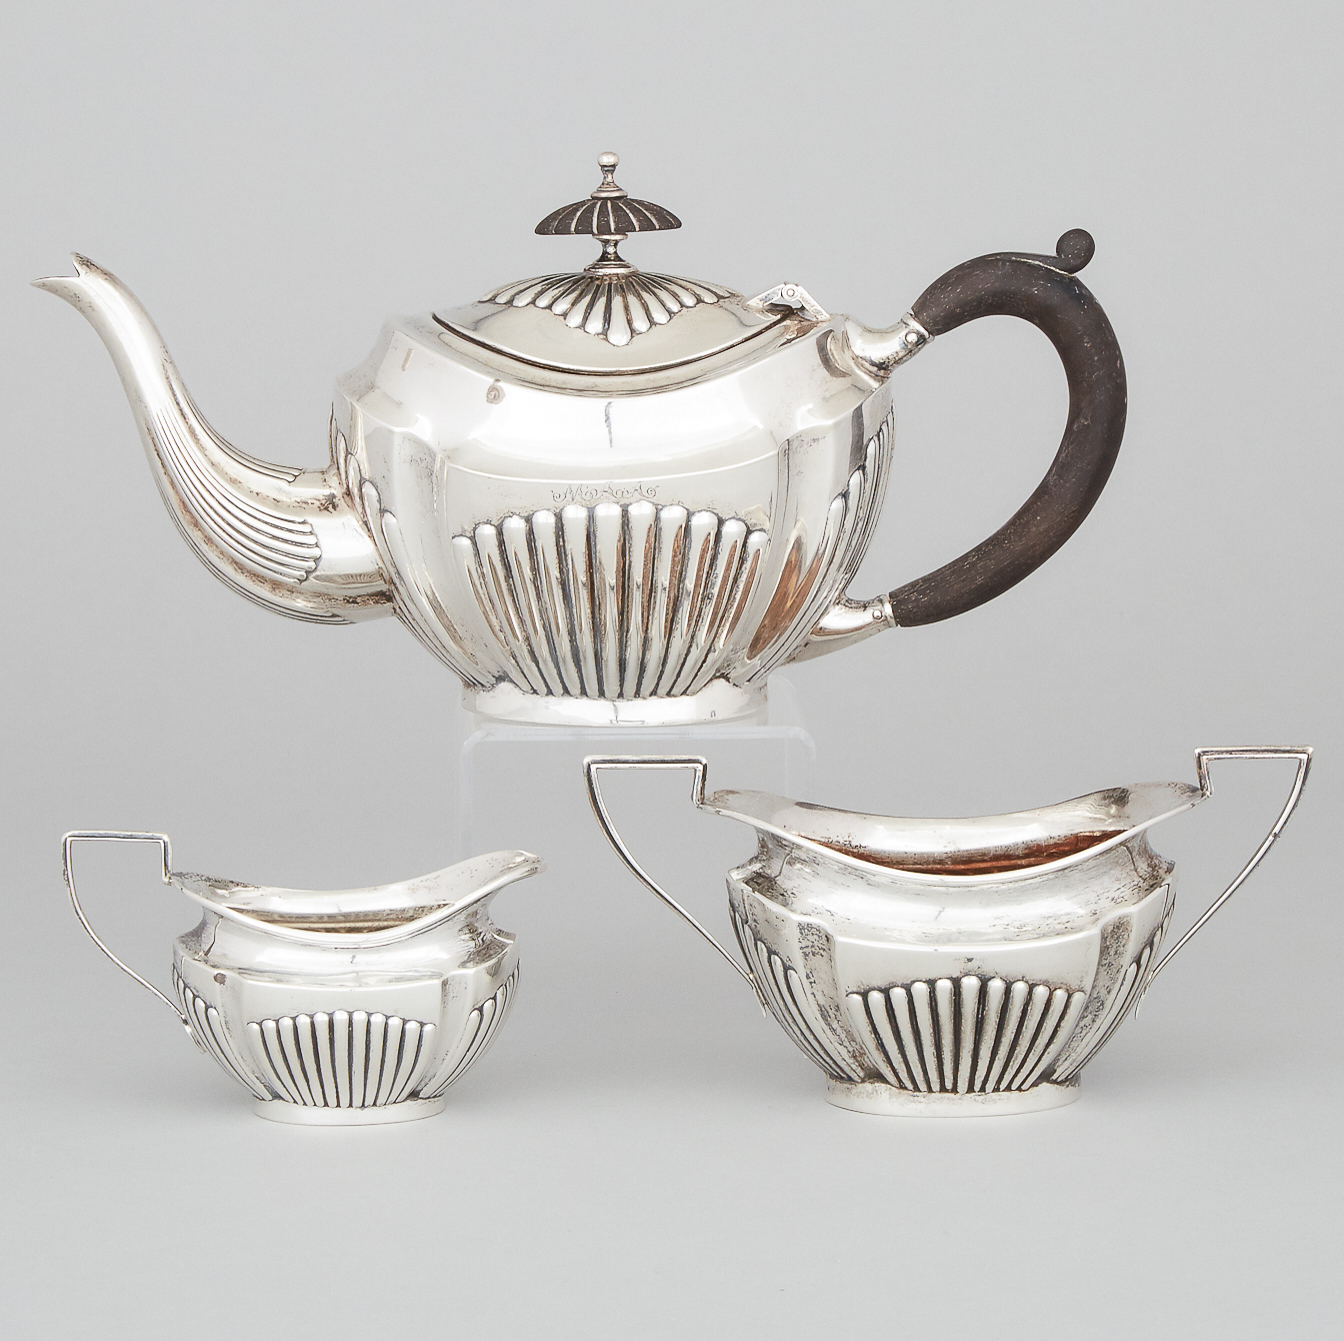 Canadian Silver Tea Service, J.E. Ellis & Co., Toronto, Ont., early 20th century